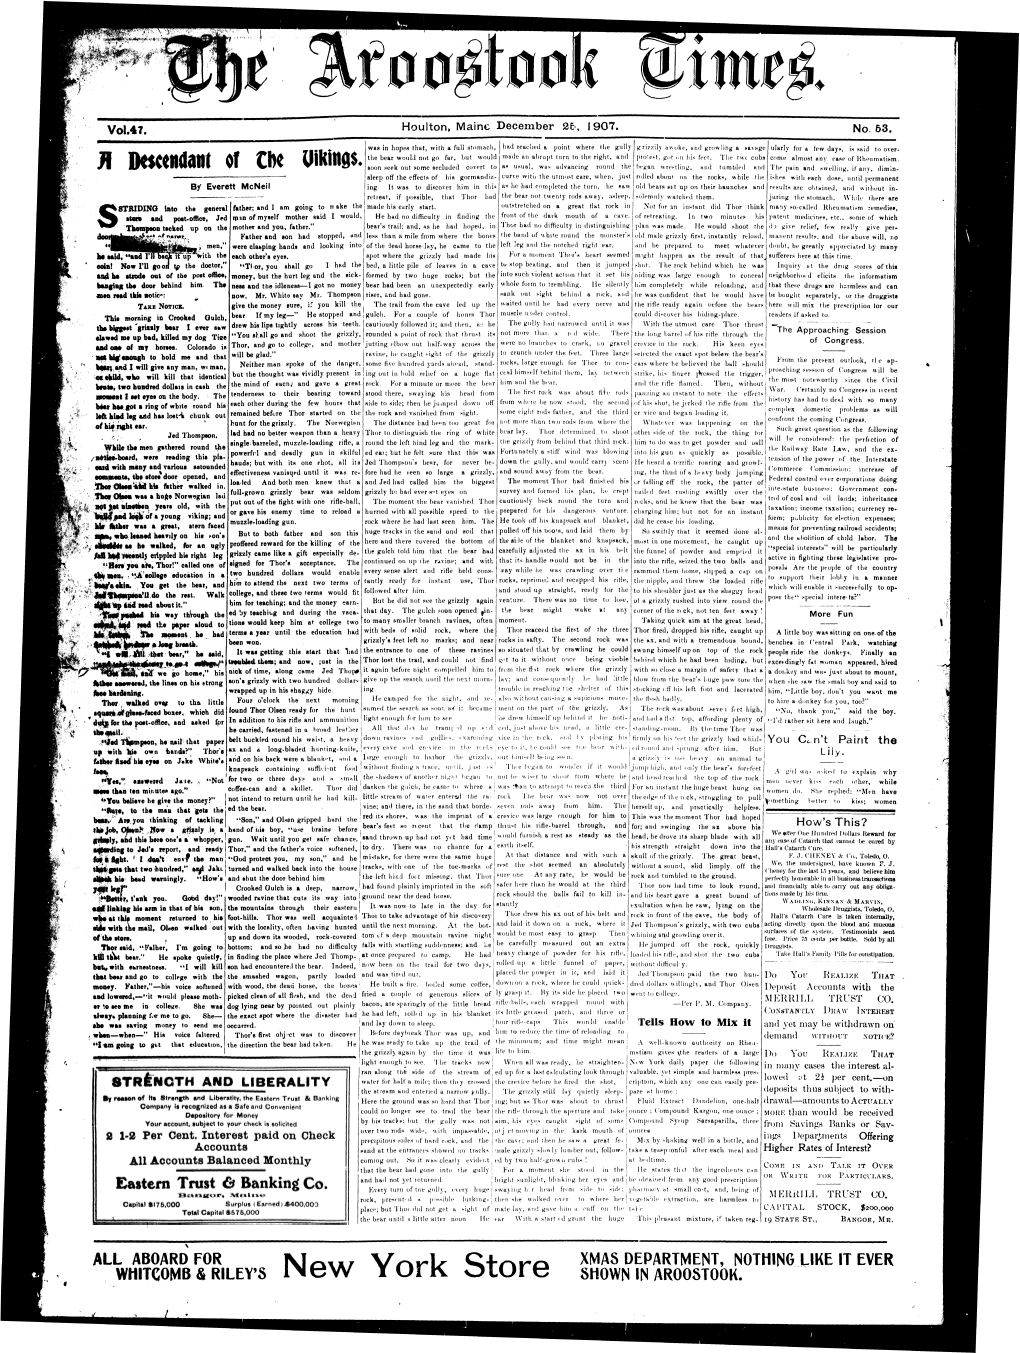 The Aroostook Times, December 25, 1907